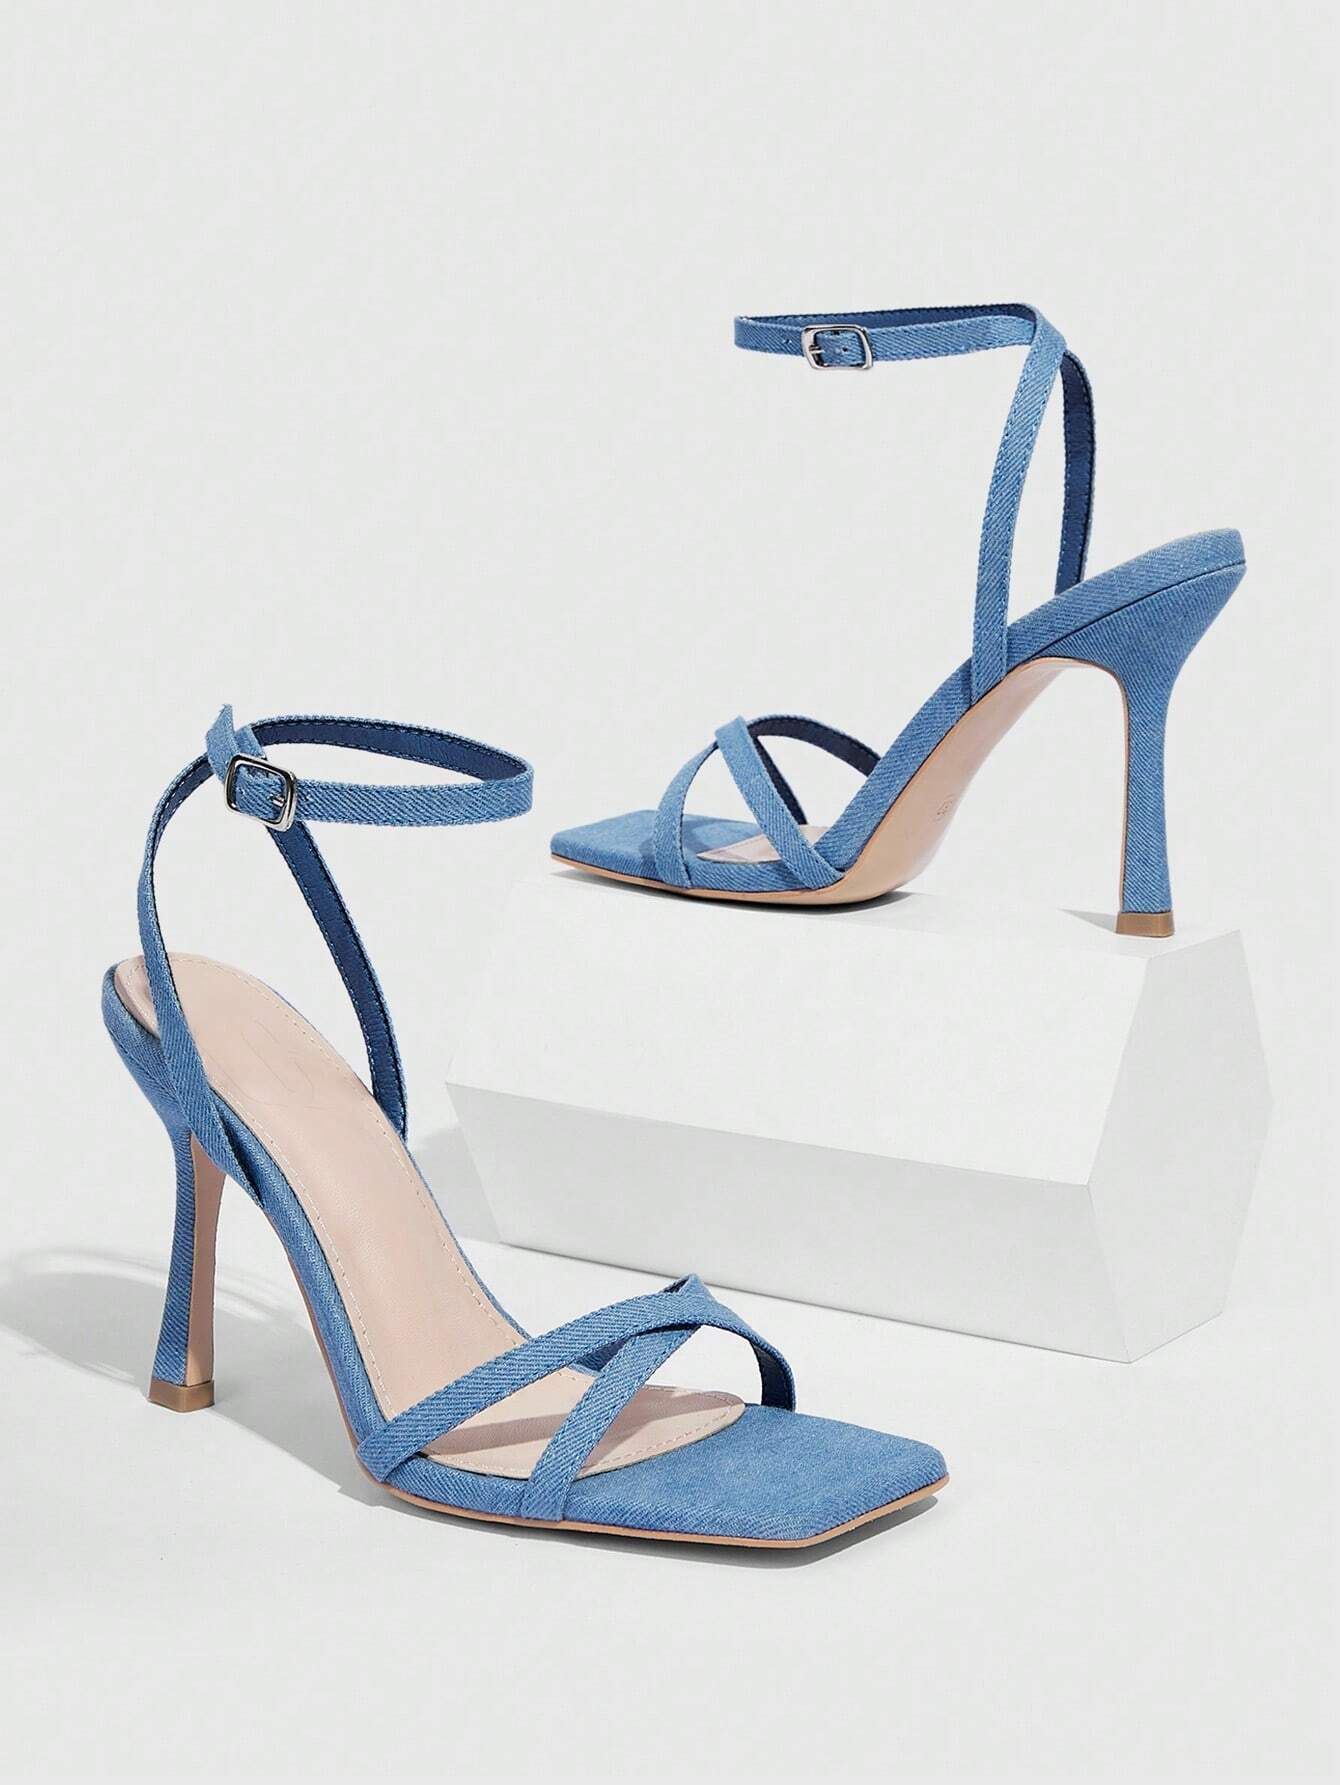 CUCCOO Trending Fashion Blue Ankle Strap Sandals For Women, Buckle Decor Stiletto Heeled Sandals | SHEIN